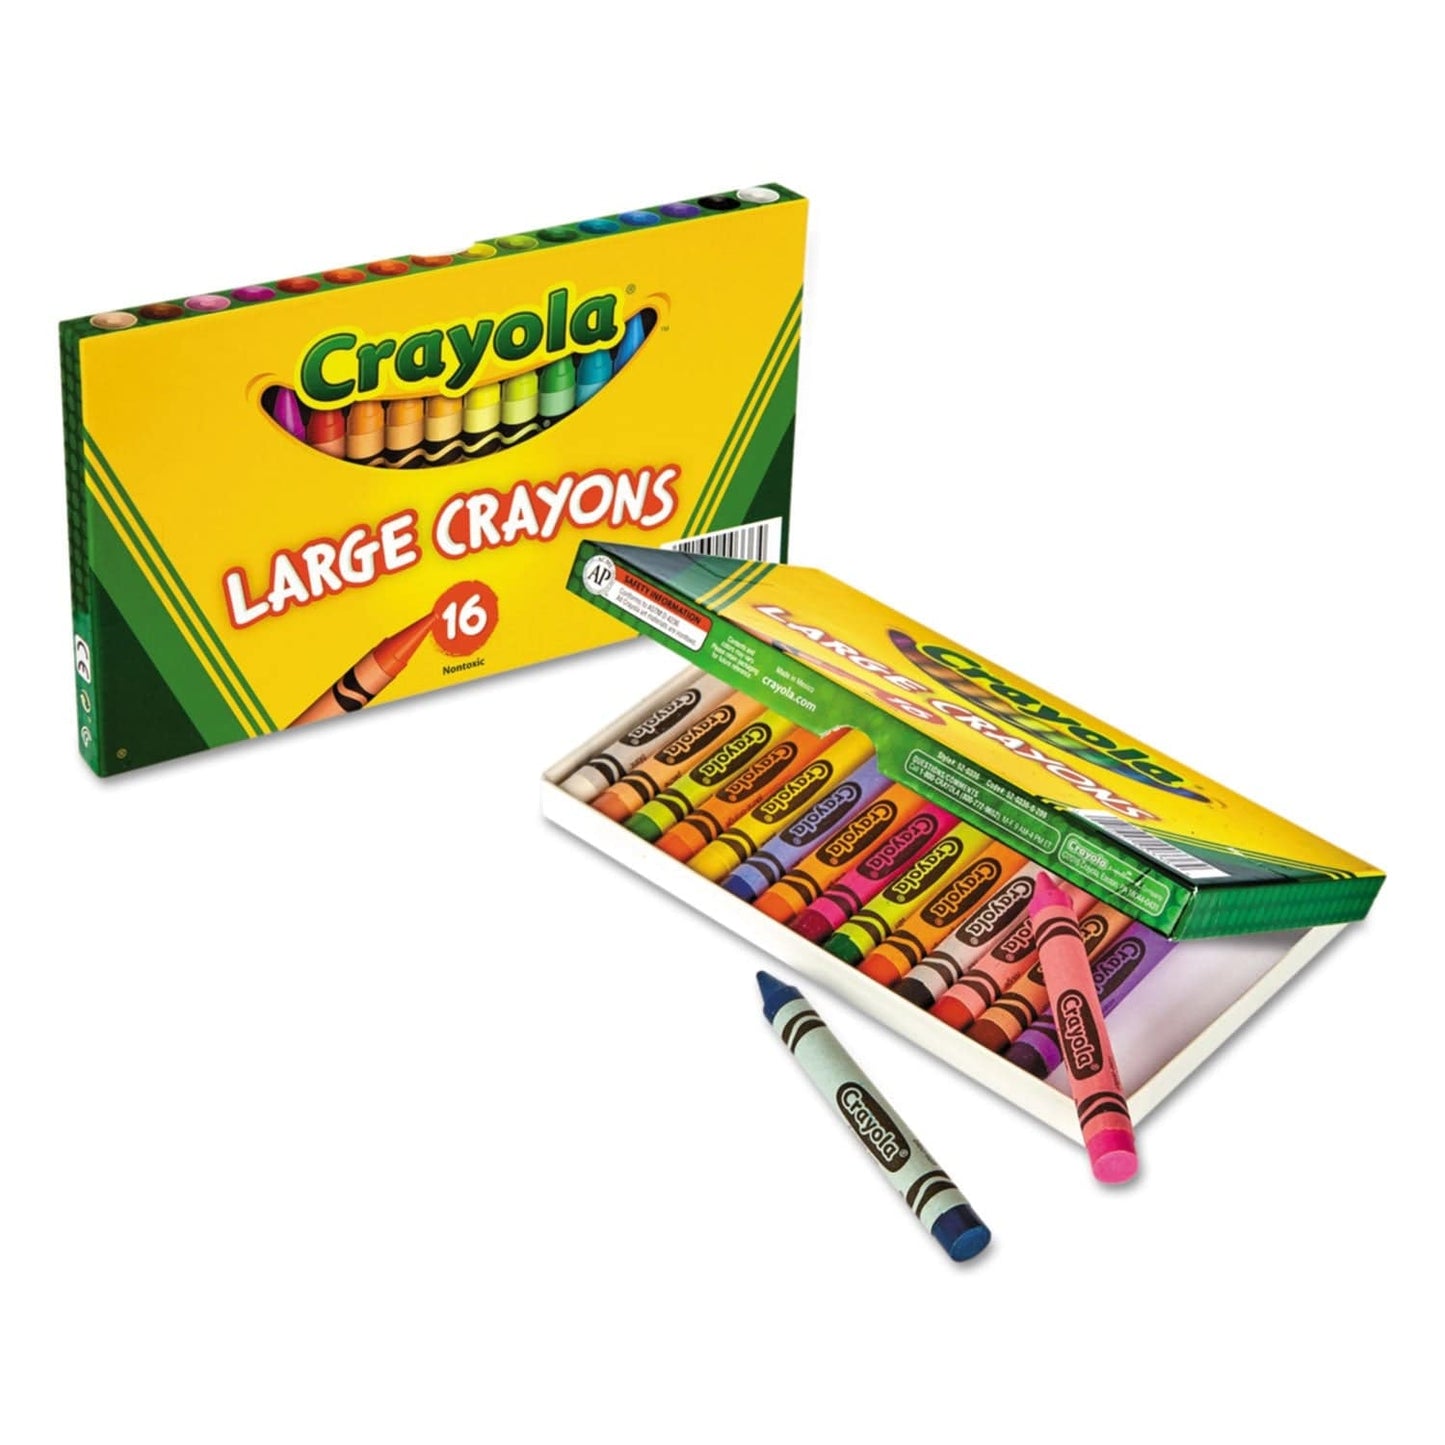 Crayola Toys Crayola - Set of 16 Large Crayons - Lift Lid Box